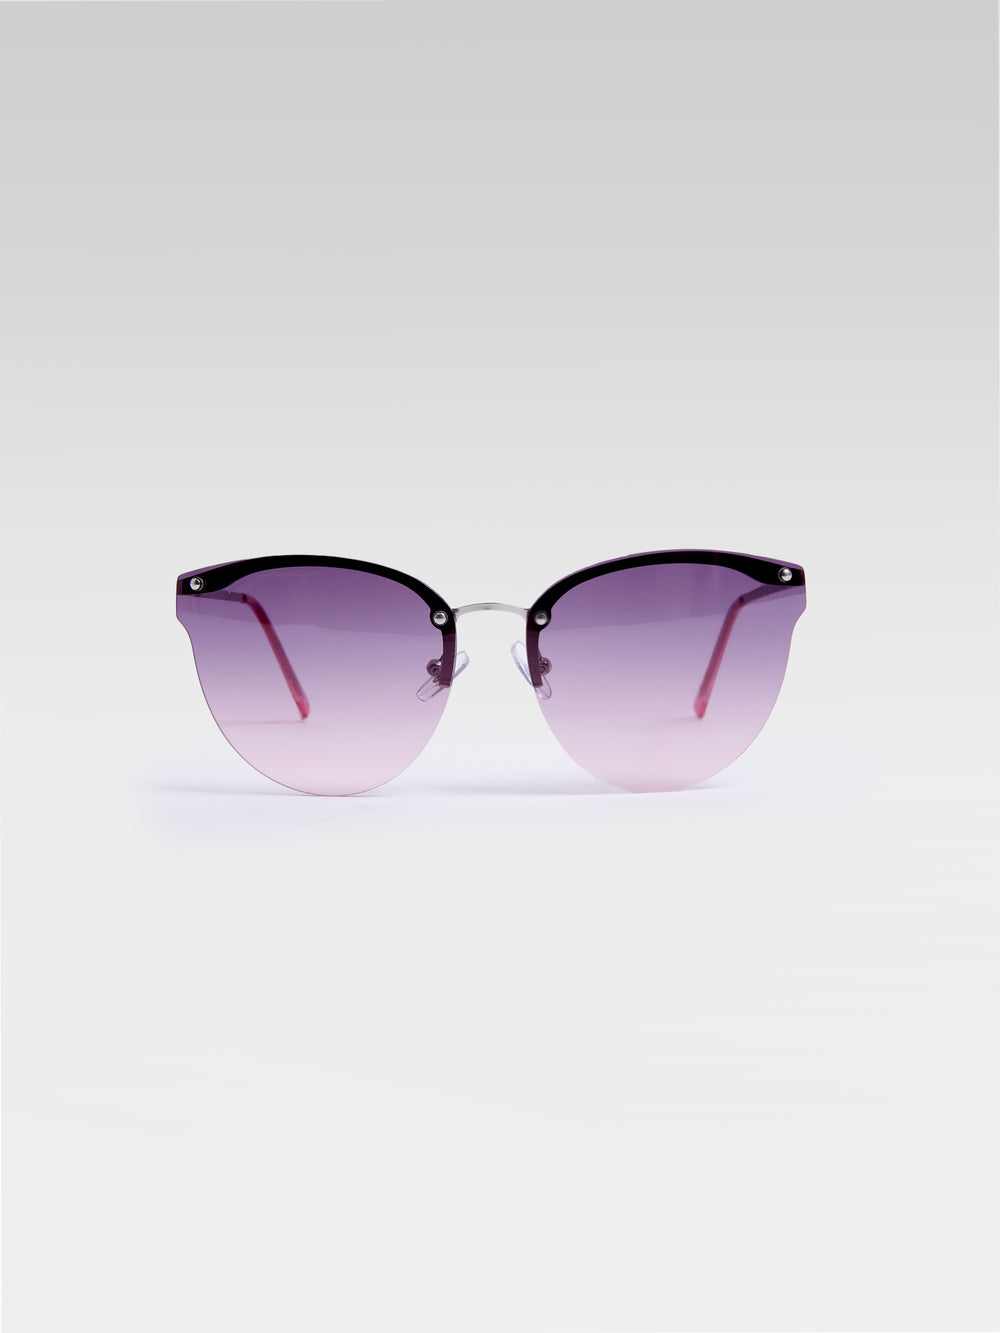 FONEX Titanium Rimless Sunglasses Men New Ultralight India | Ubuy